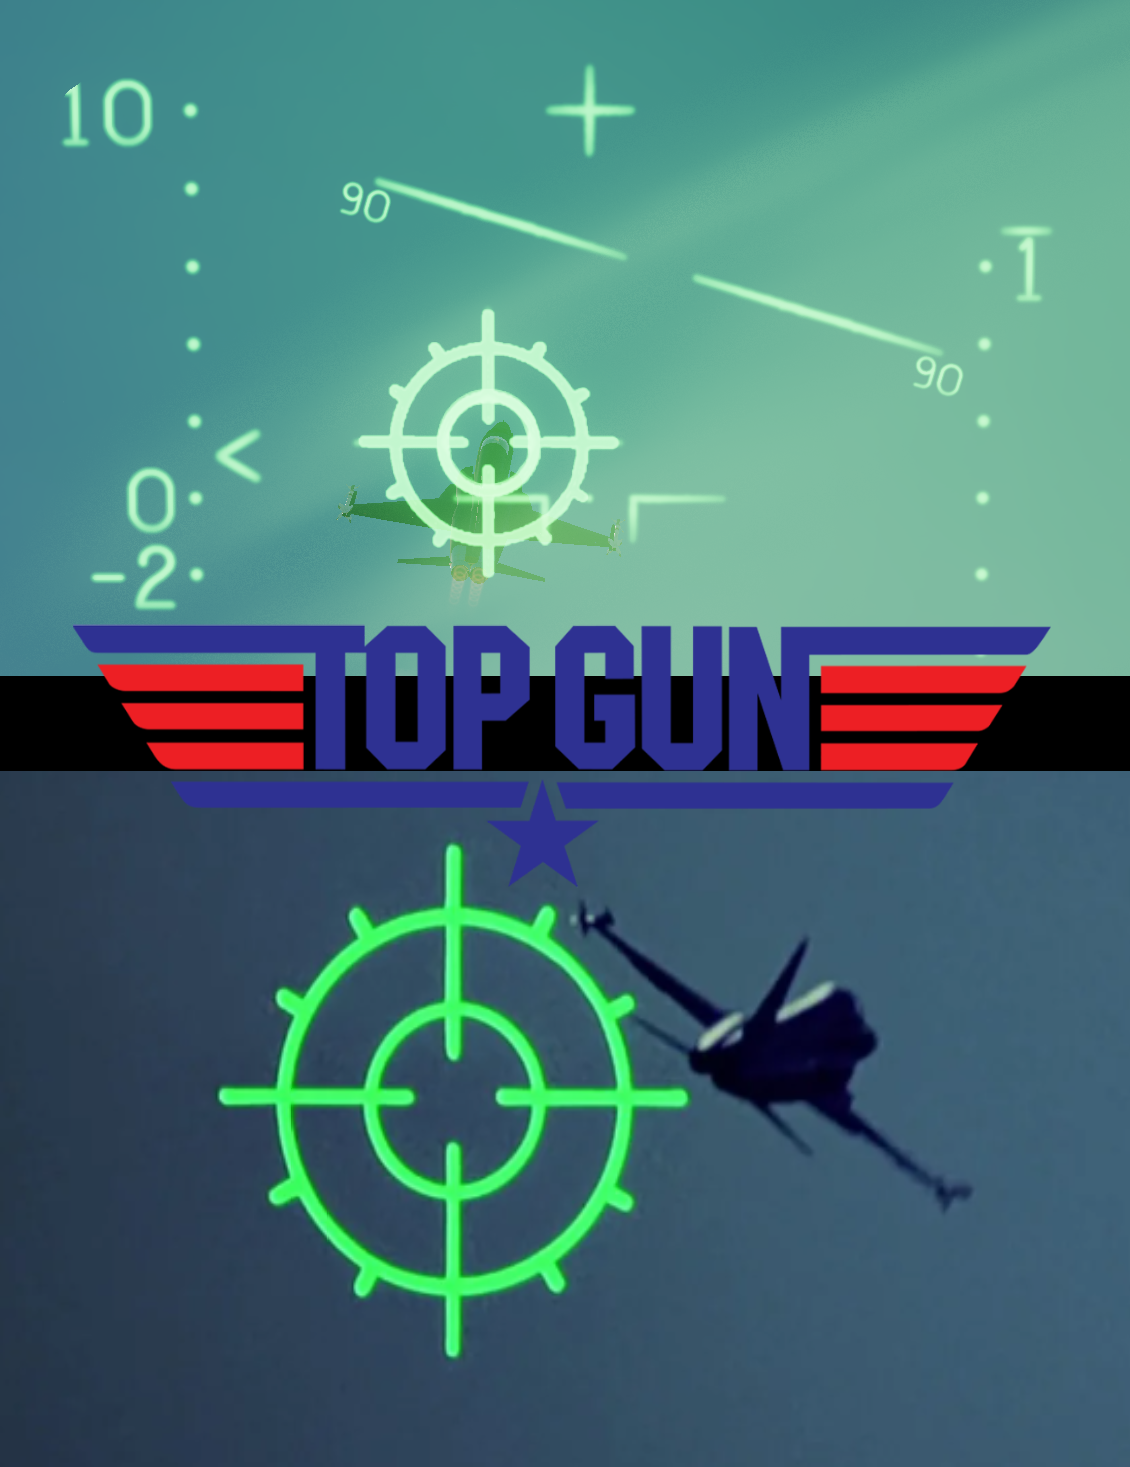 Top Gun Hud Symbology